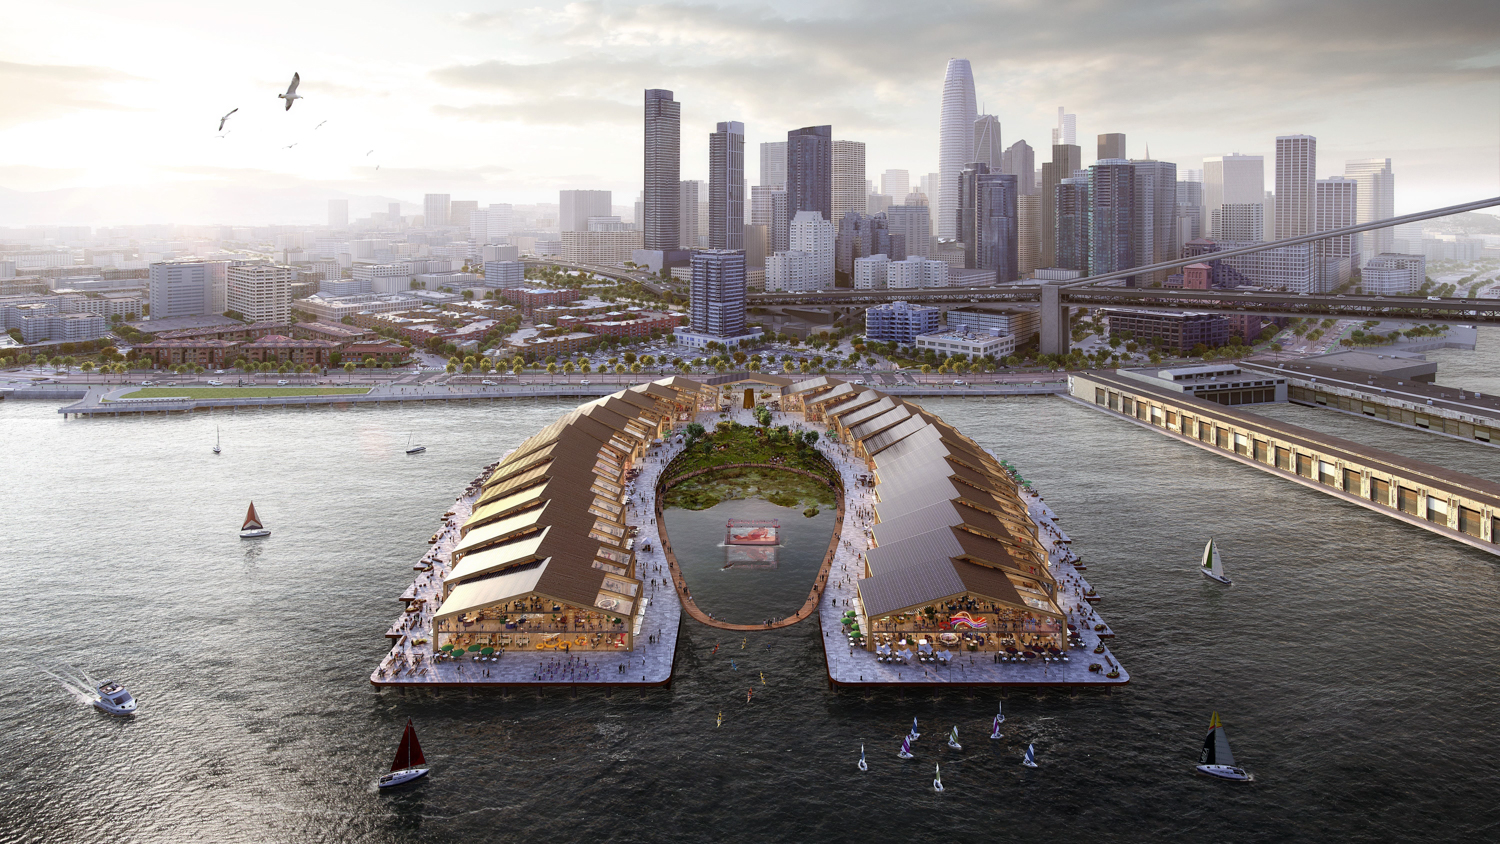 Pier 30-32 proposal, design by Heatherwick Studio